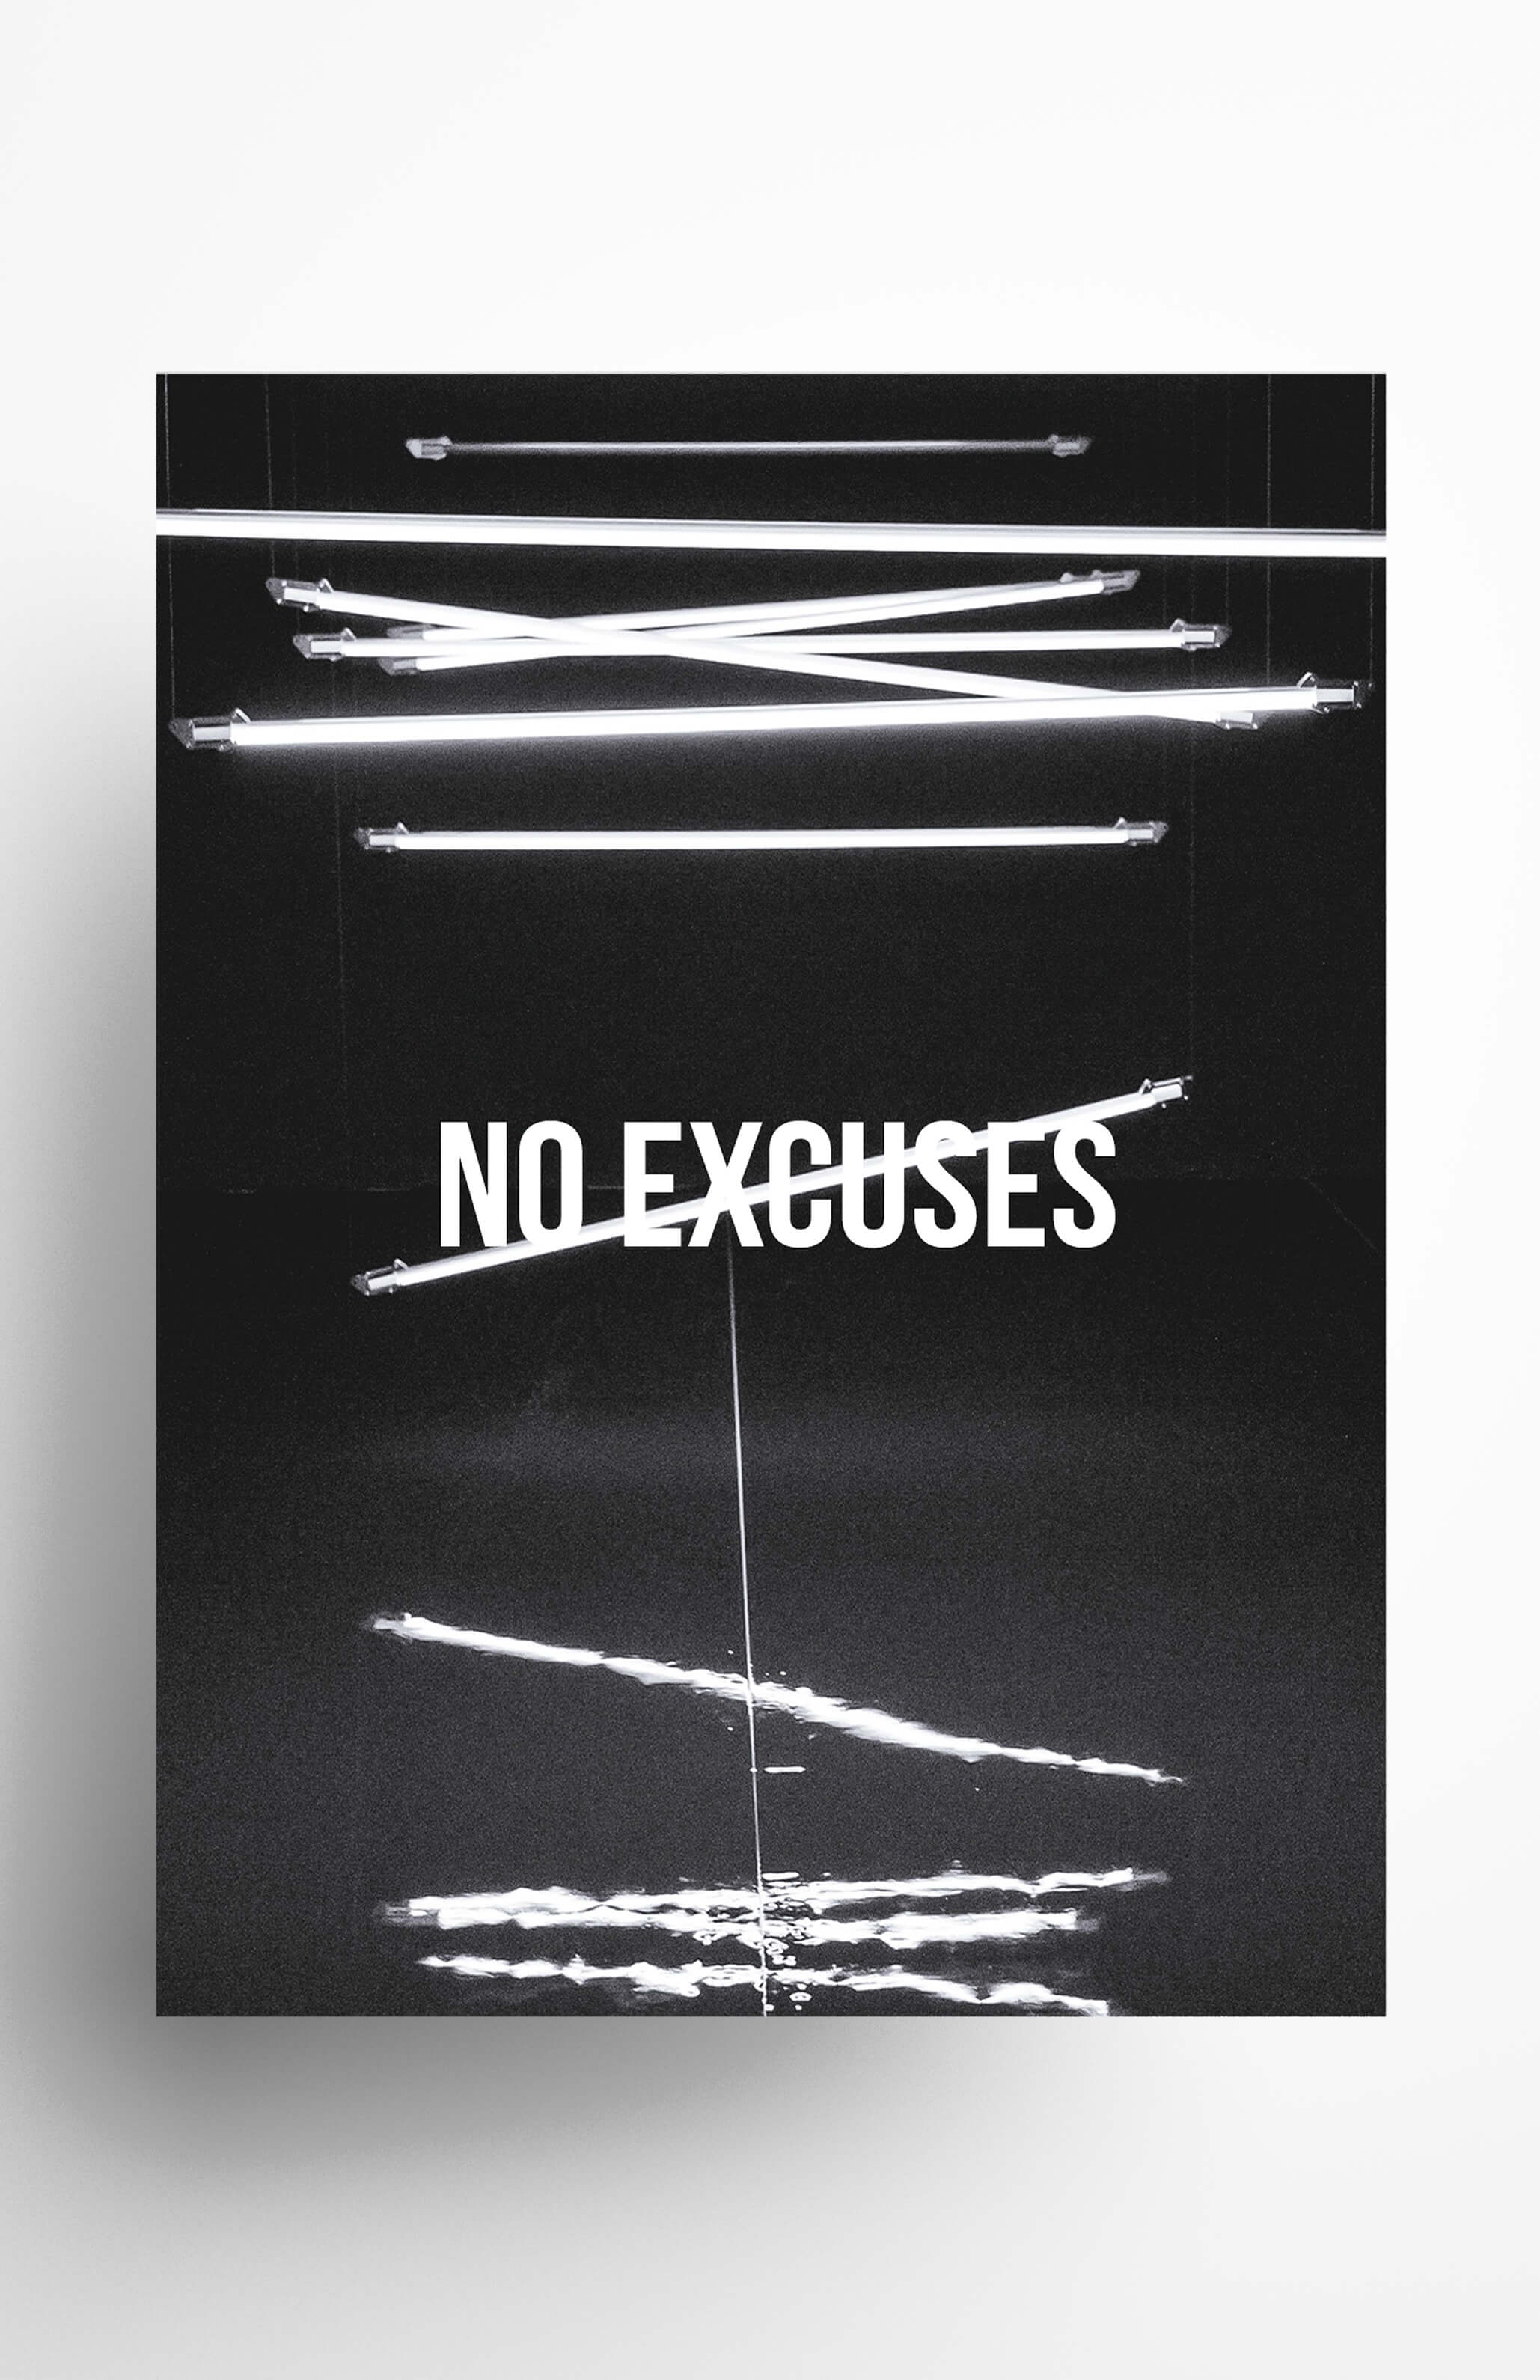 no excuses wallpaper